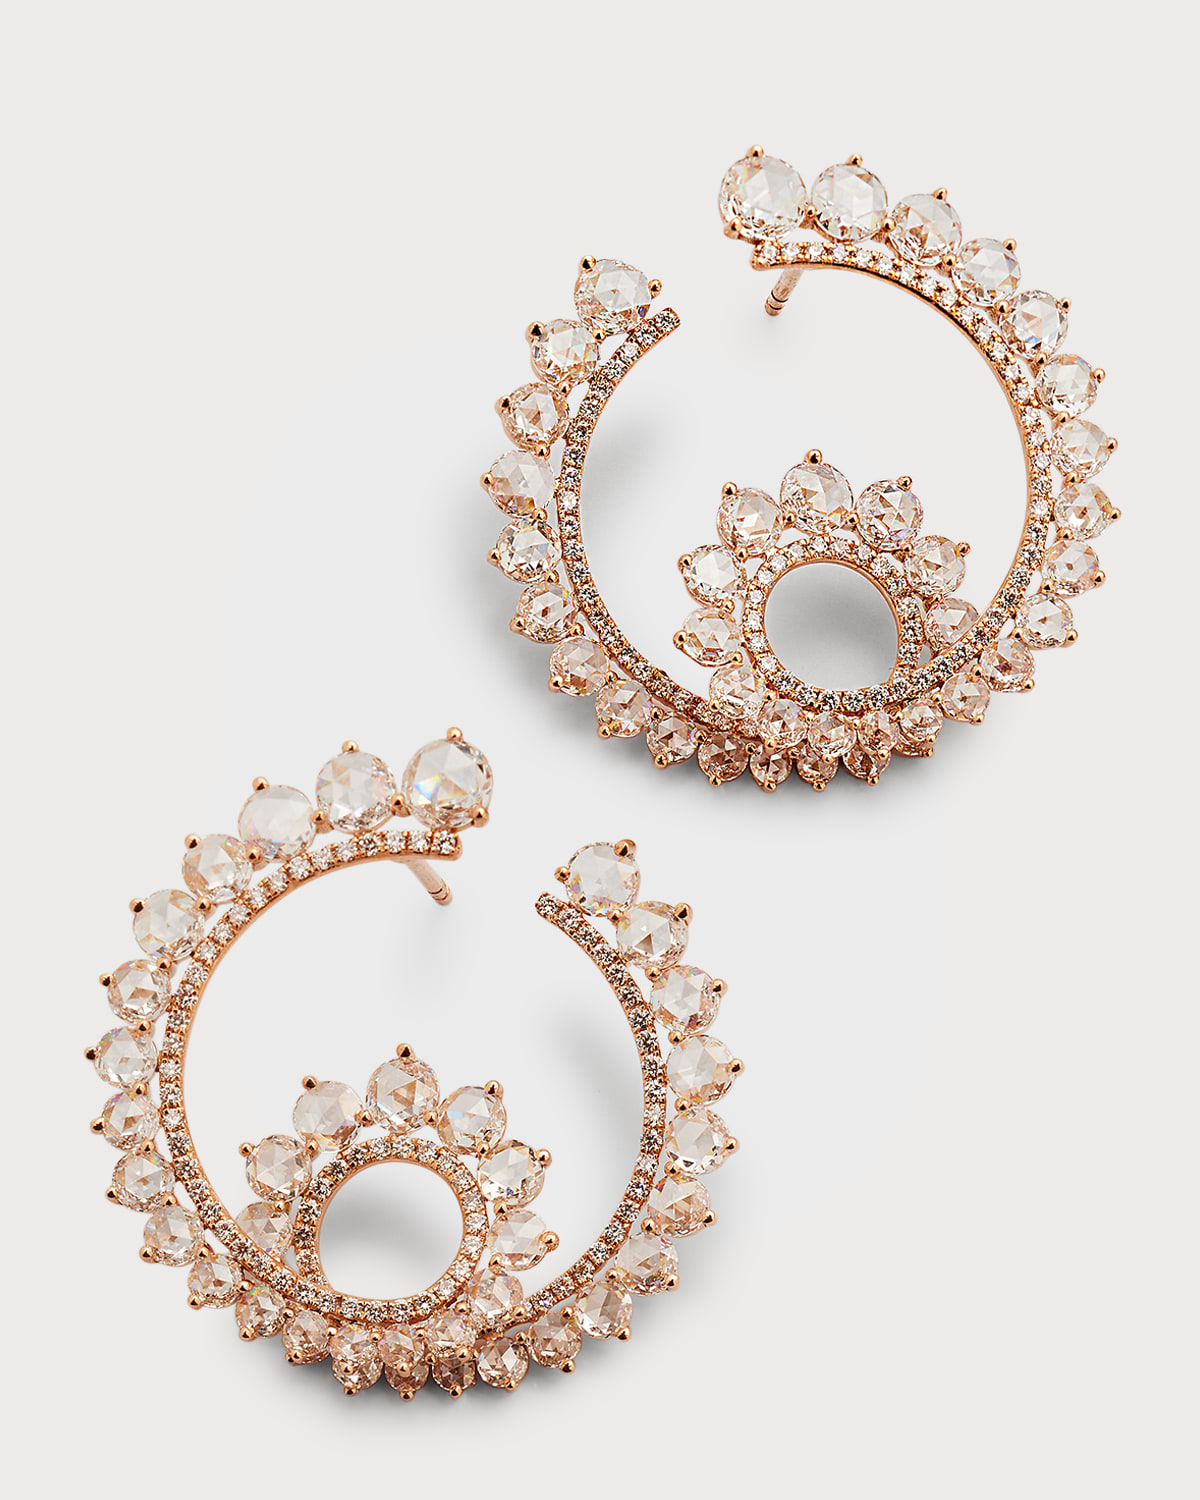 18K Rose Gold Infinite Loop Earrings with Brilliant and Rose-Cut Diamonds